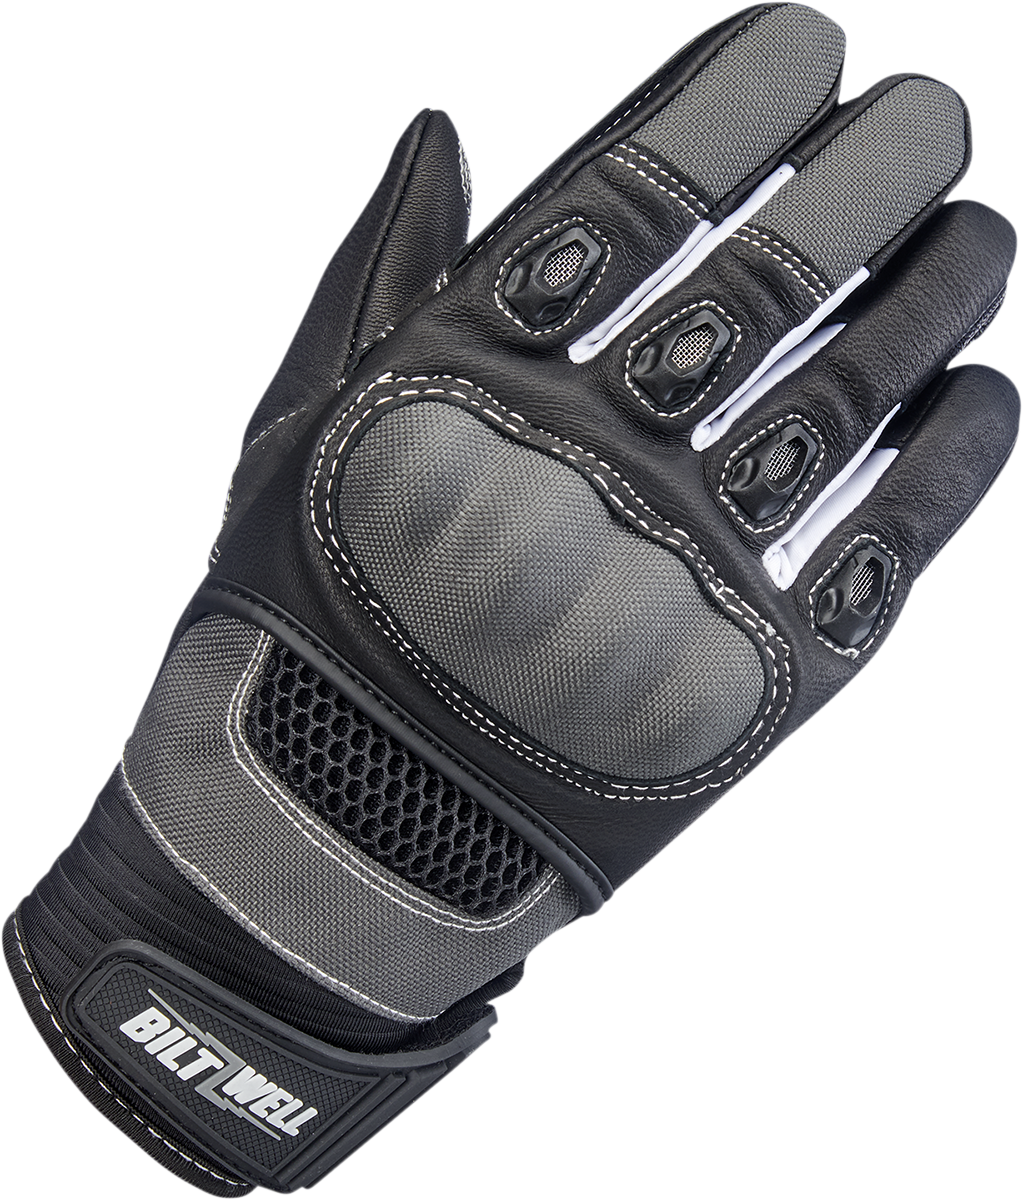 BILTWELL Bridgeport Gloves - Gray - Large 1509-1101-304